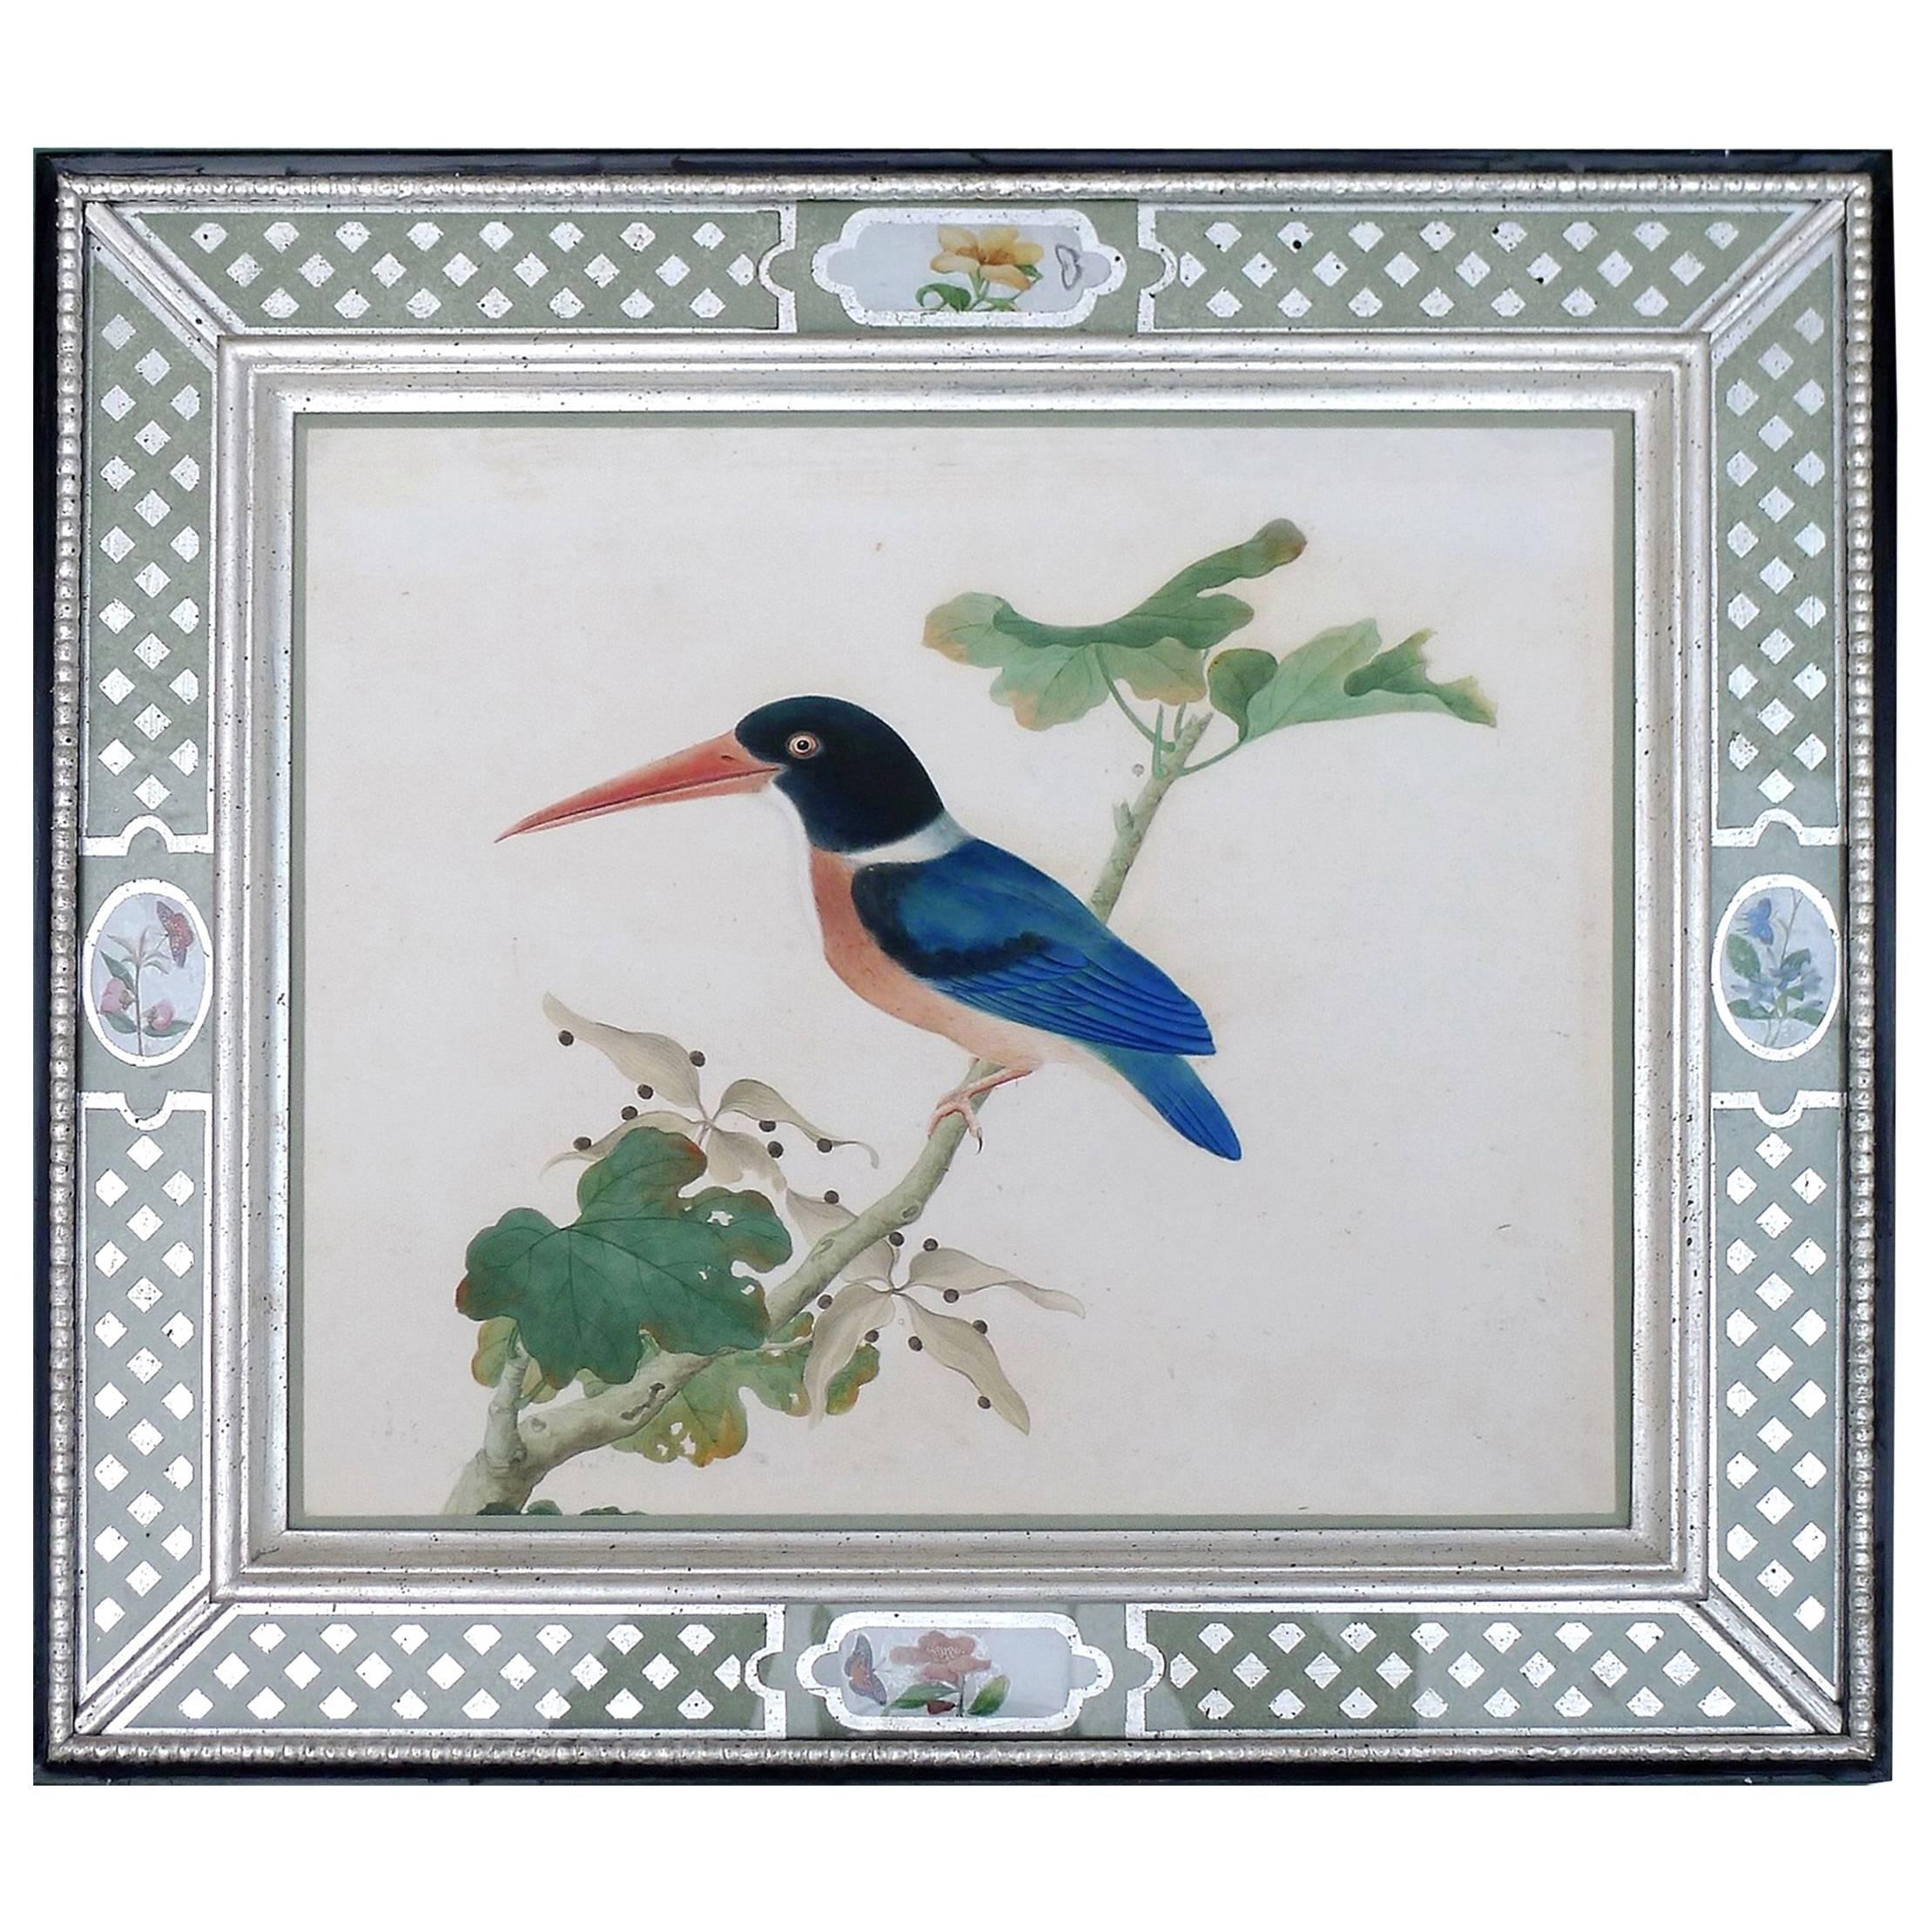 China Trade Large Watercolor Painting of a Bird, Kingfisher, circa 1800-1820